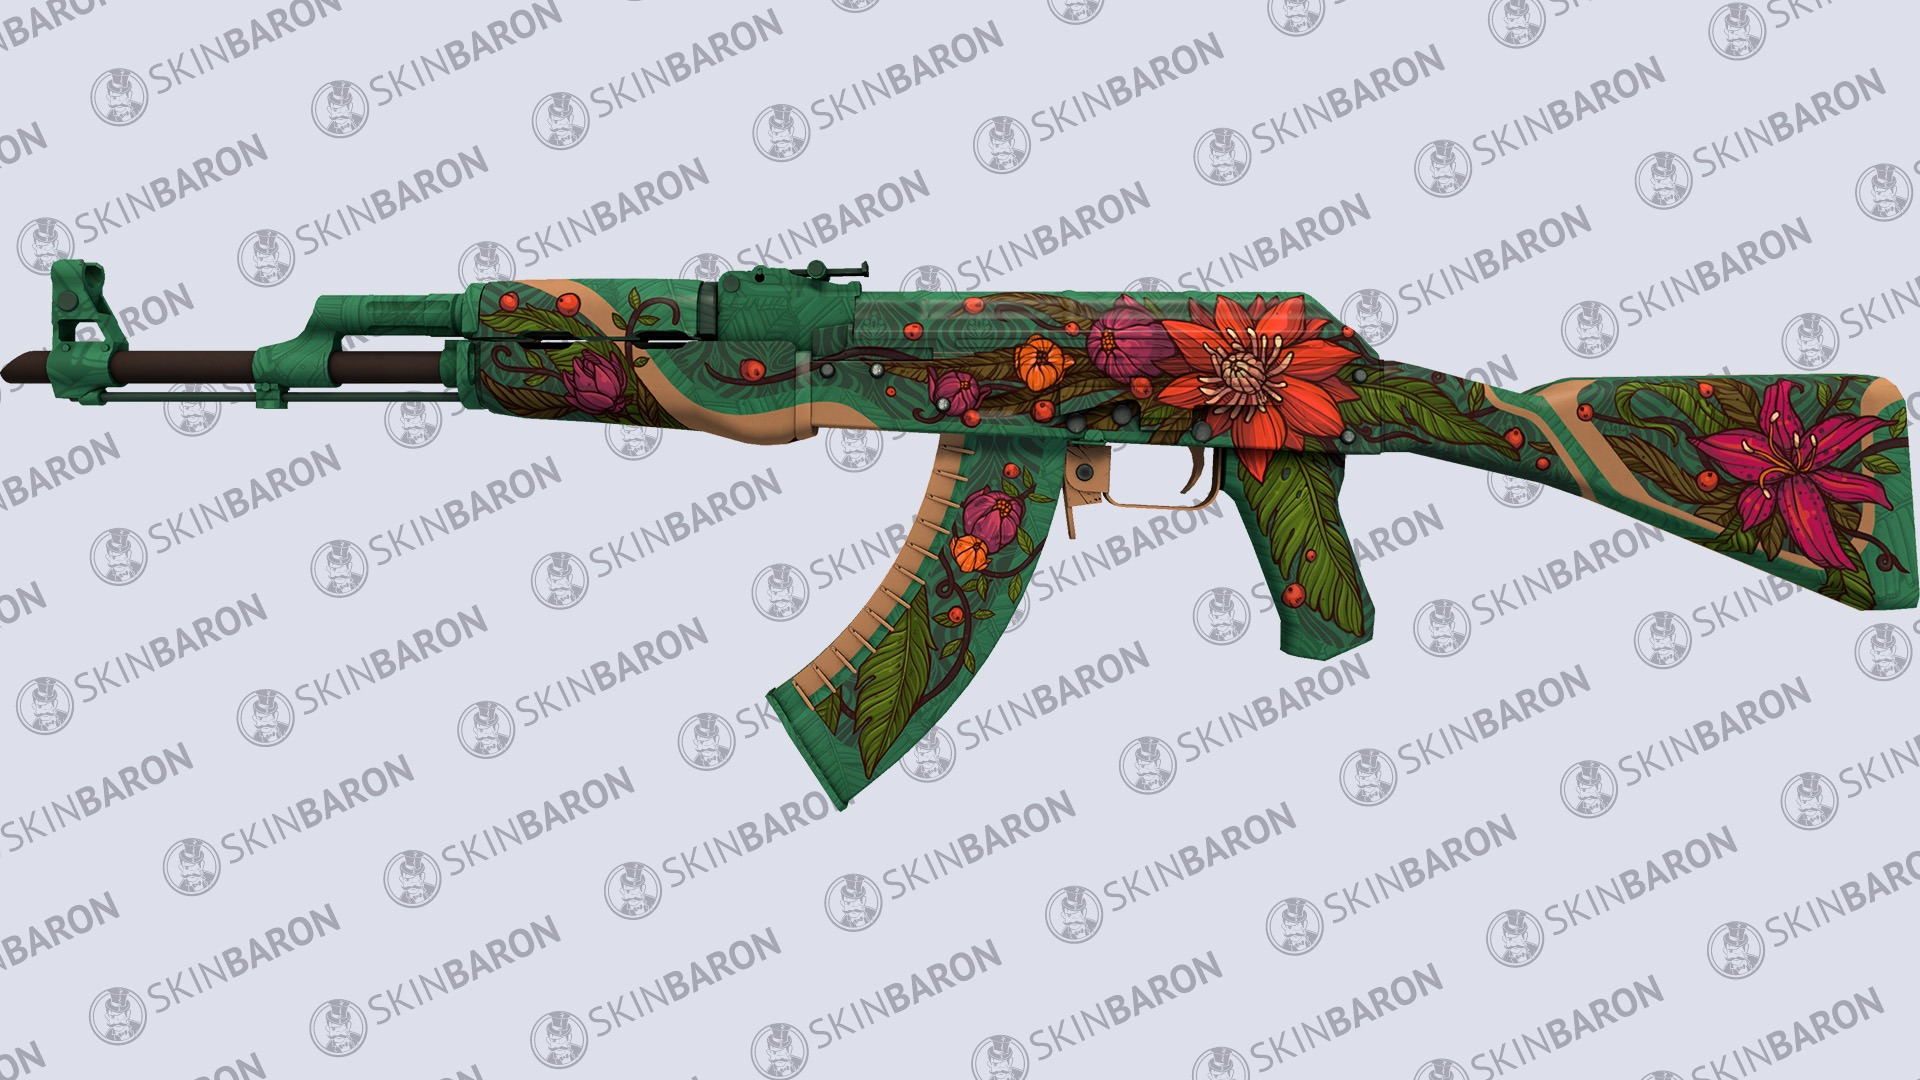 AK-47 Wild Lotus - Most Expensive AK-47 skins